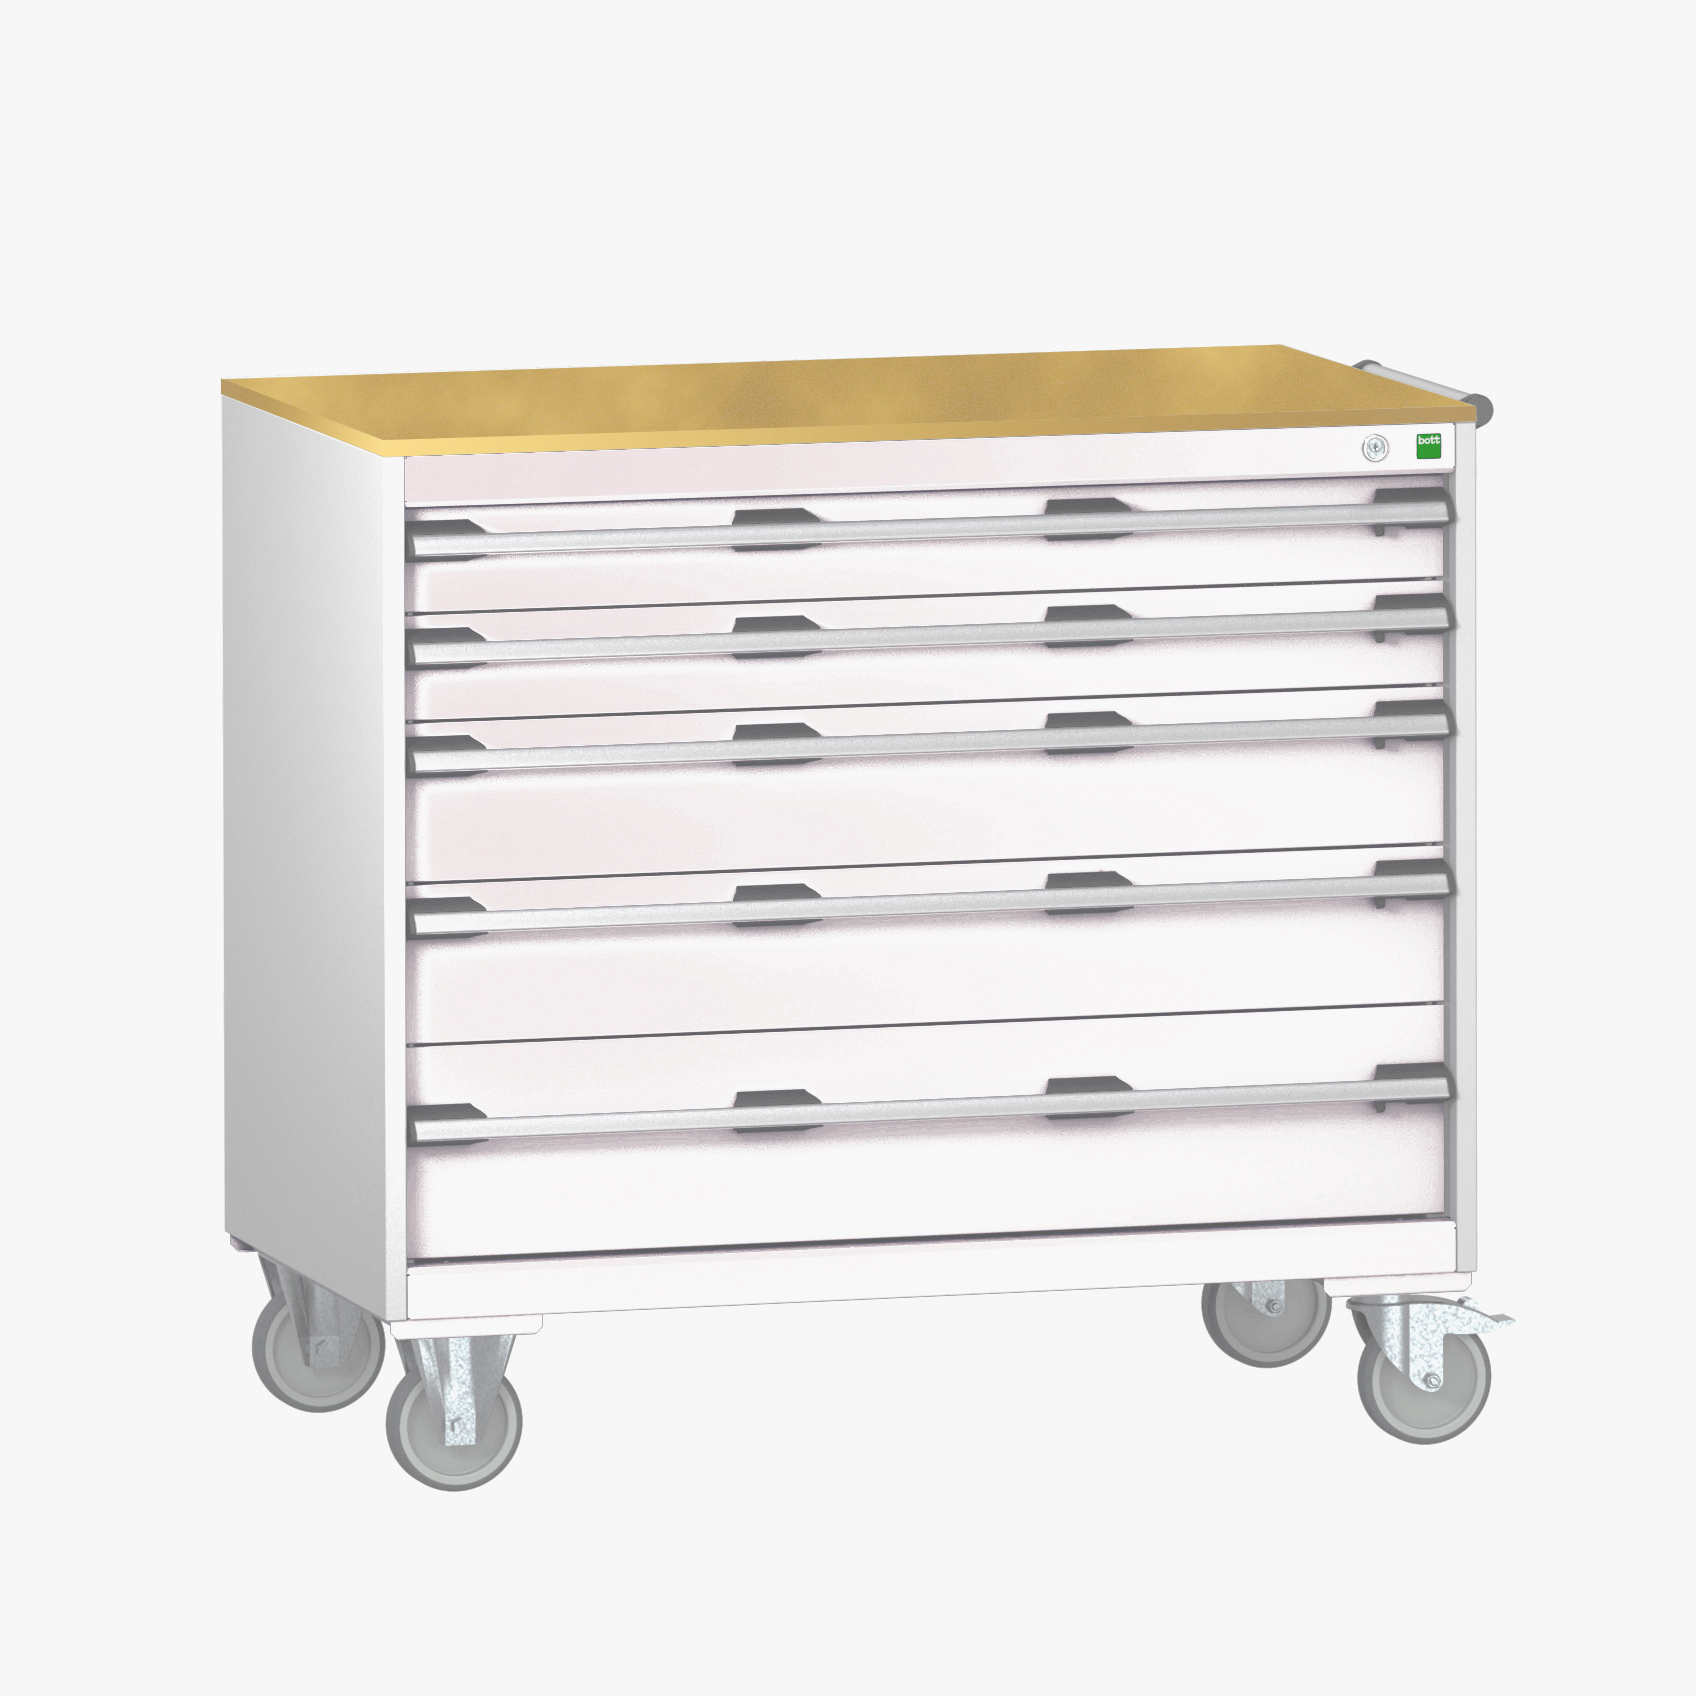 Bott Cubio Mobile Drawer Cabinet With 5 Drawers & Multiplex Worktop - 40402165.16V